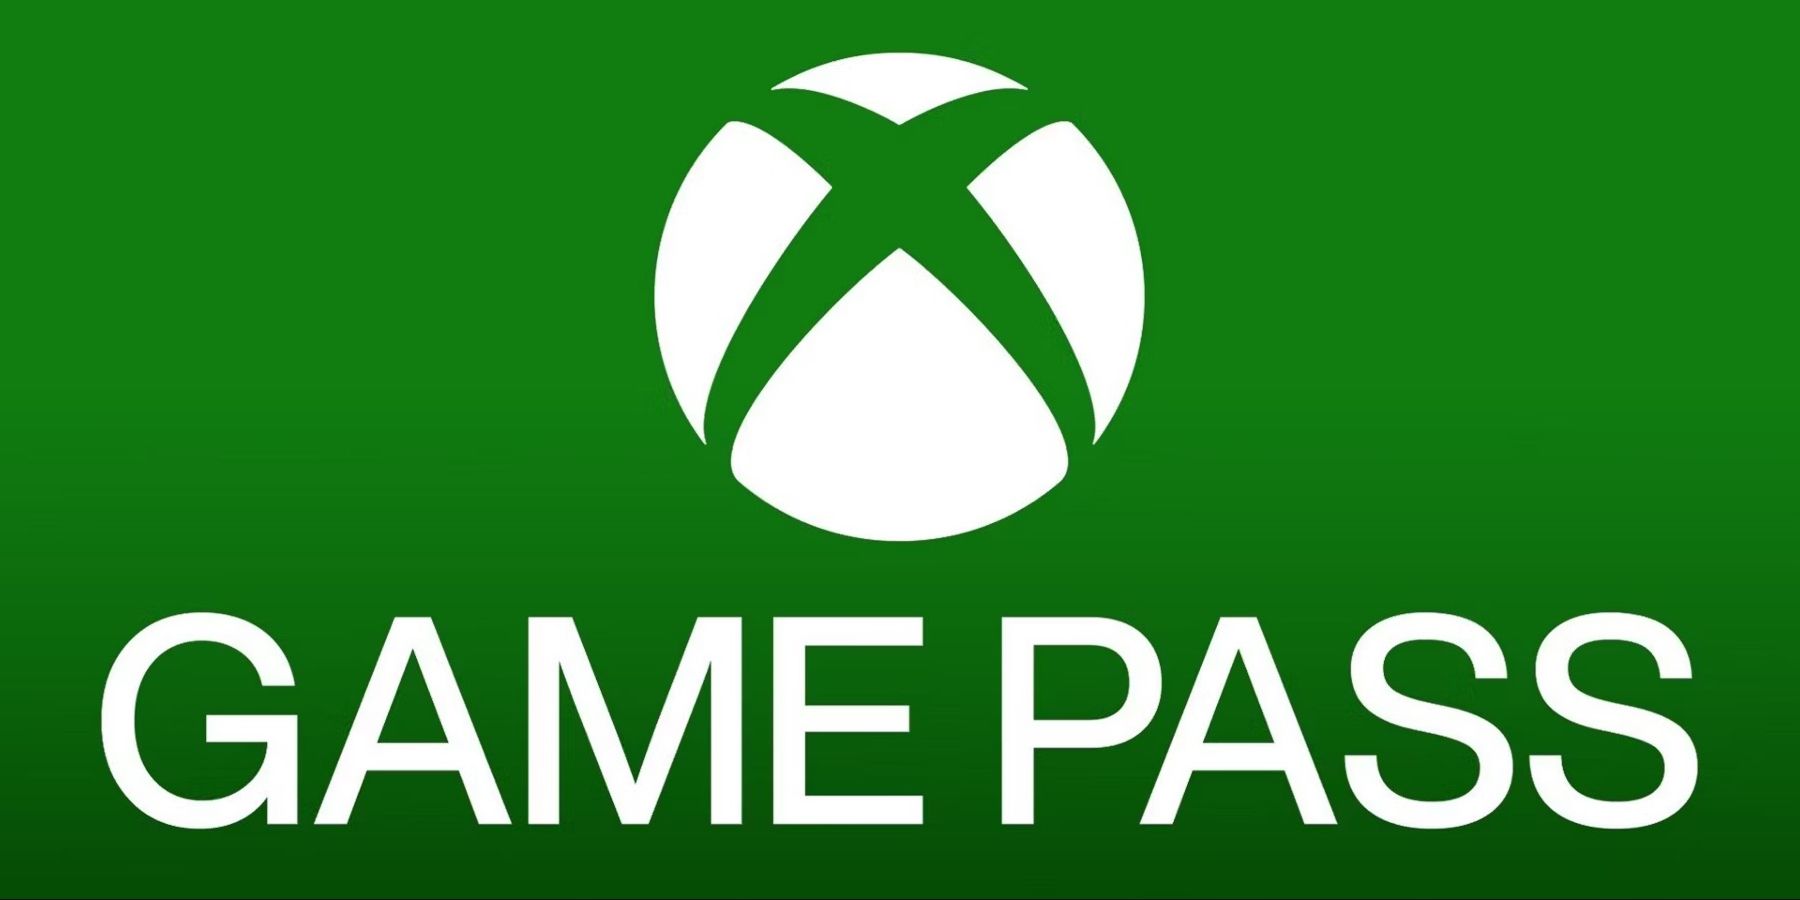 xbox game pass big green logo